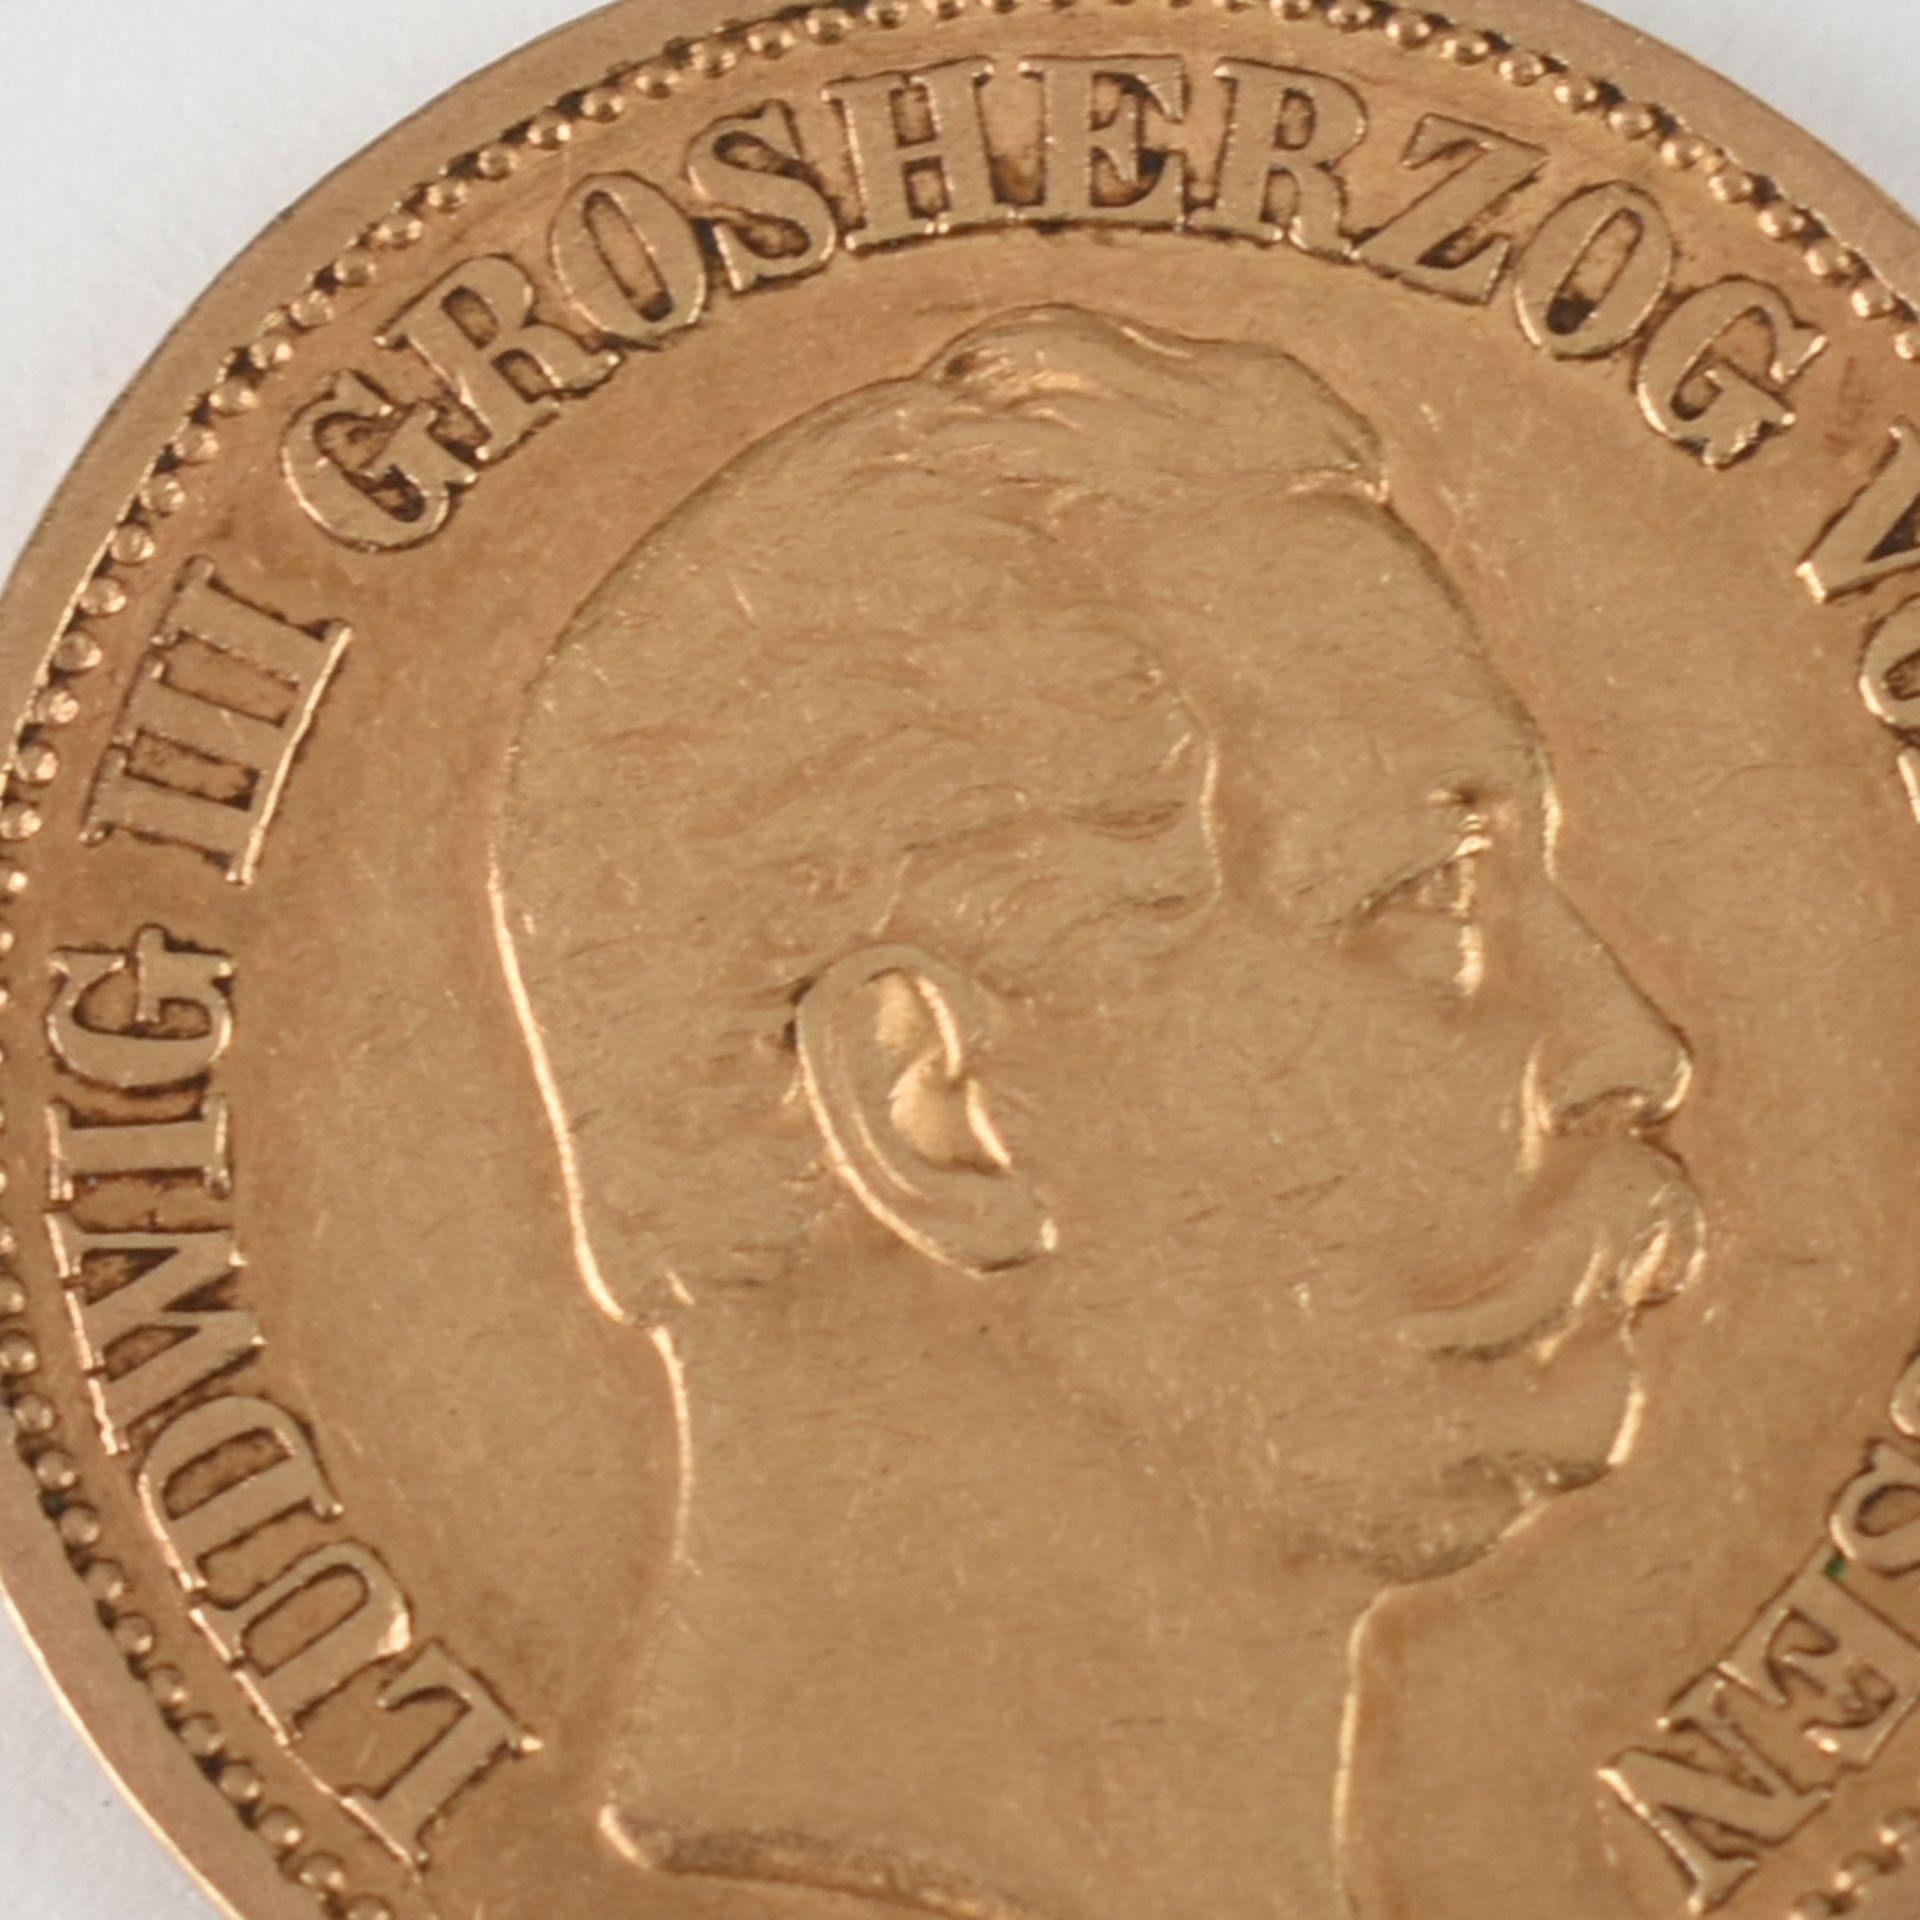 Goldmünze Kaiserreich - Hessen 1873 20 Mark in Gold, 900/1000, 7,96 g, D ca. 22,5 mm, av. Ludwig III